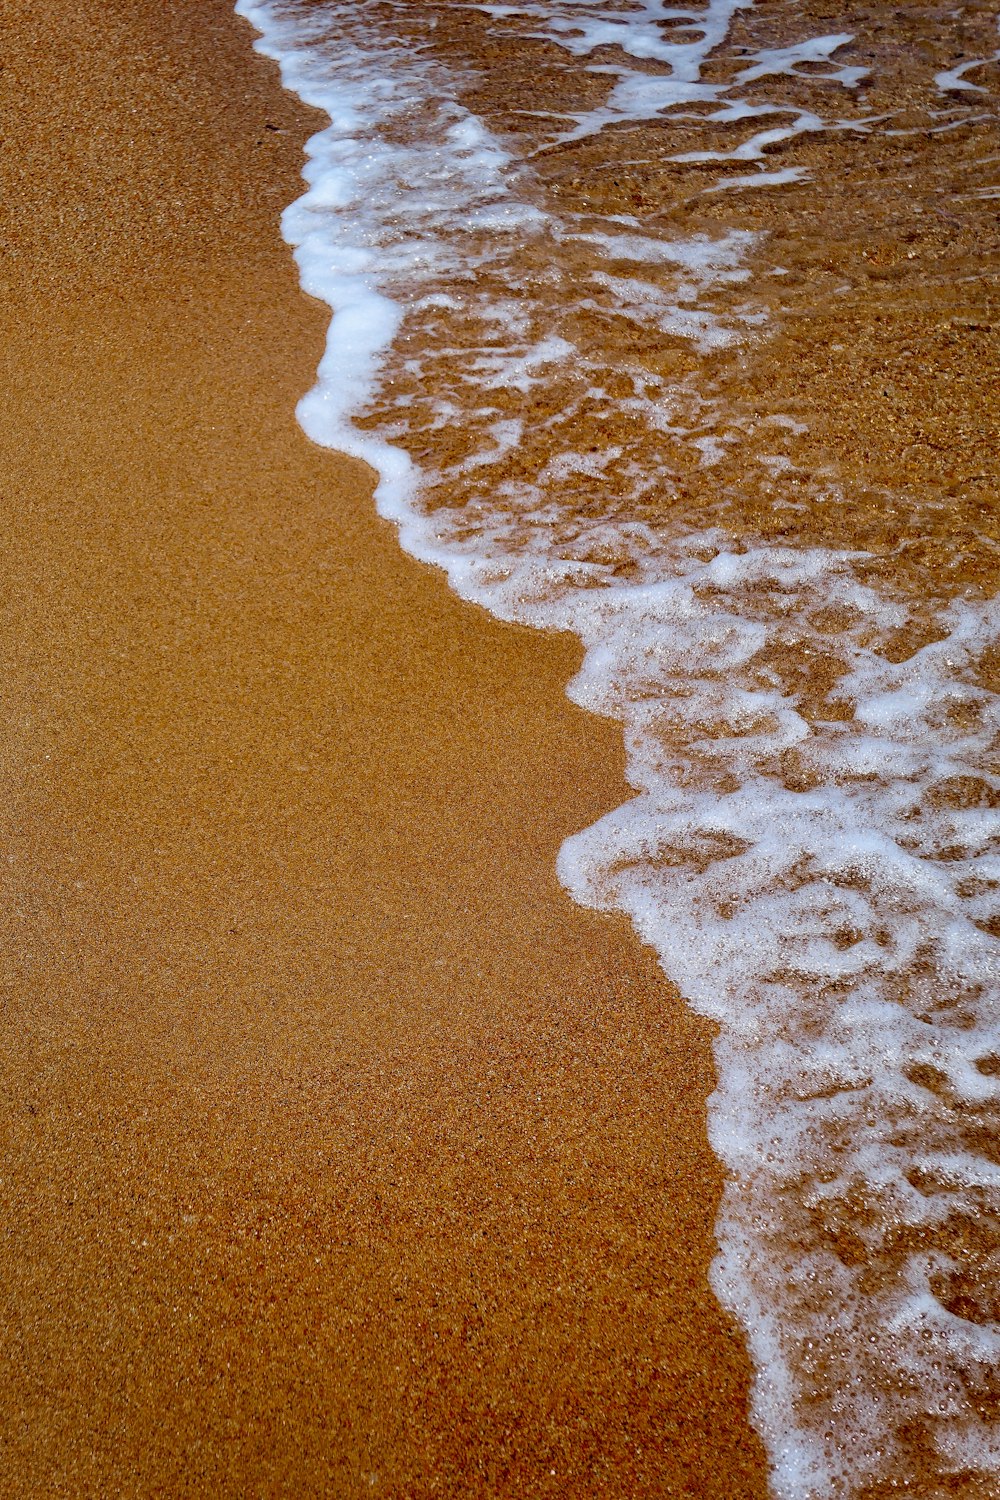 white sea foam on brown sandy beach